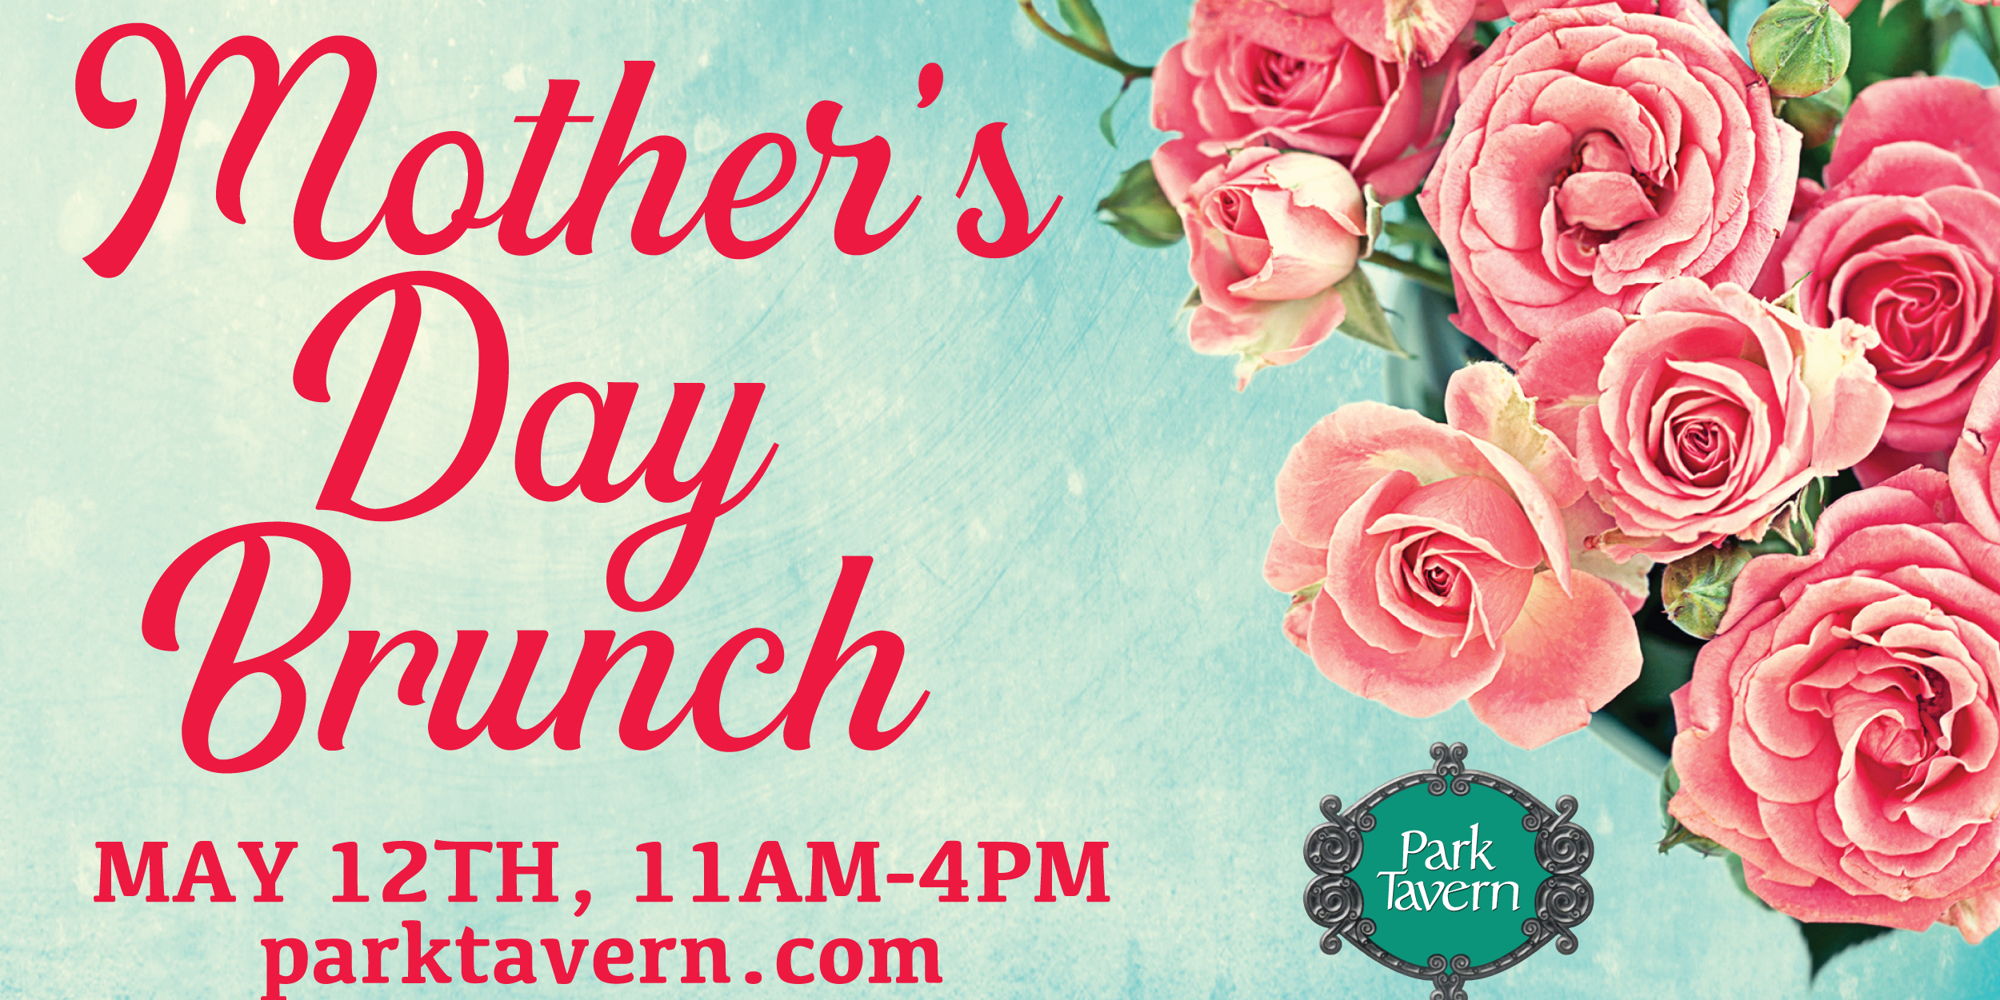 Mother's Day Brunch at Park Tavern promotional image